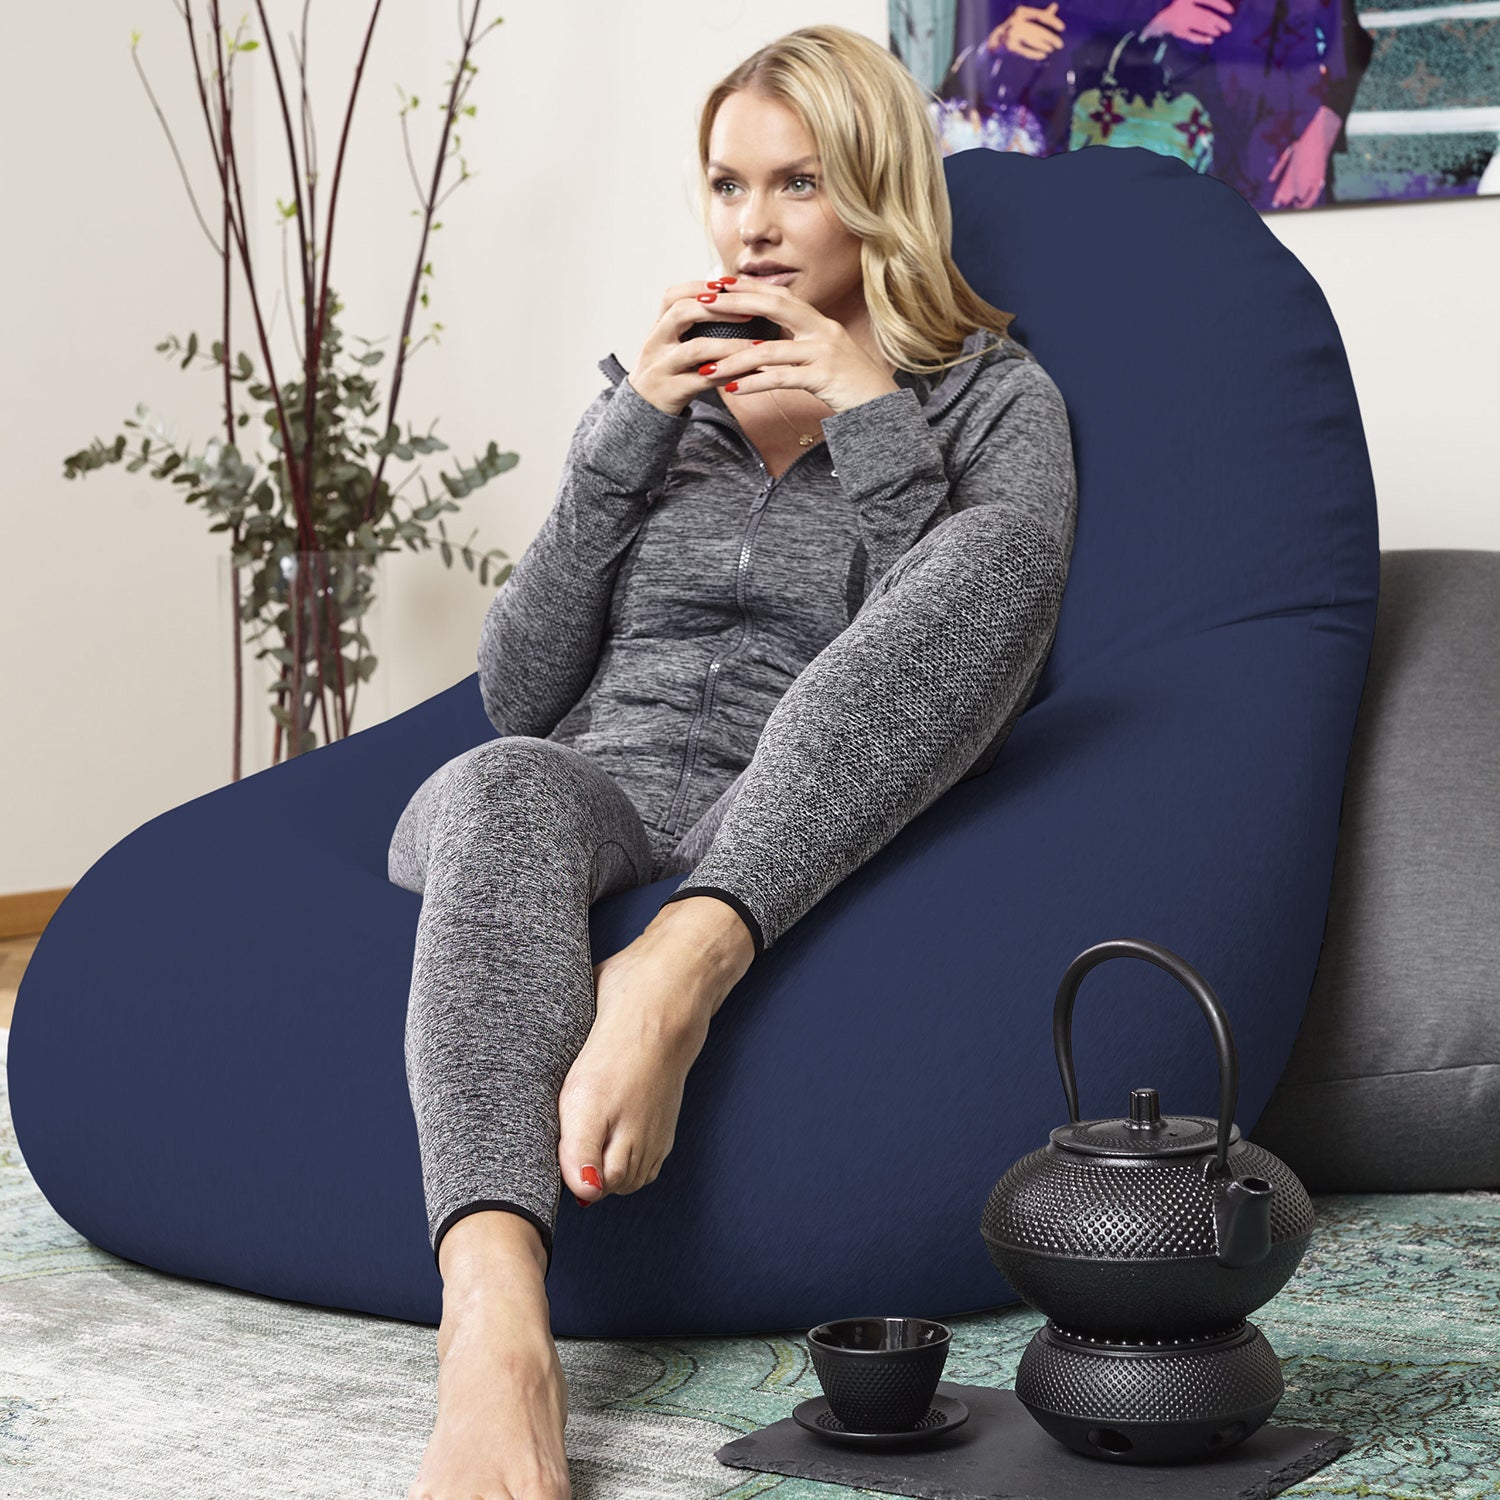 Flexi Comfort Sitzsack (380 L) - indoor - Navyblau